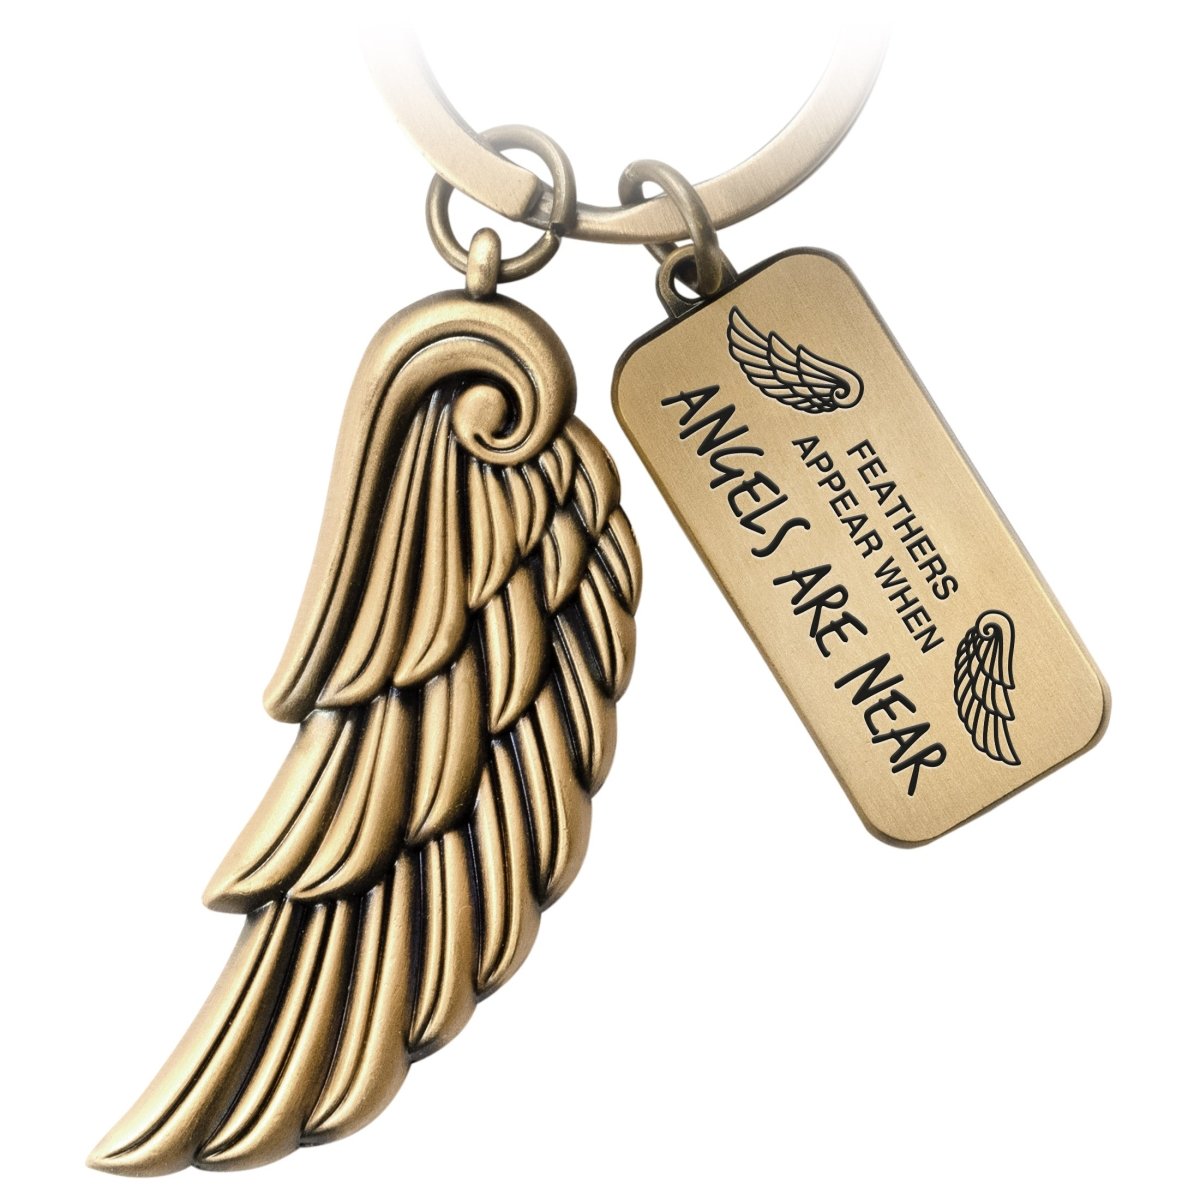 "Angels" Engelsflügel Schlüsselanhänger - Gravur mit Botschaft "Feathers appear when angels are near" -Engel Flügel Glücksbringer - FABACH#farbe_antique bronze